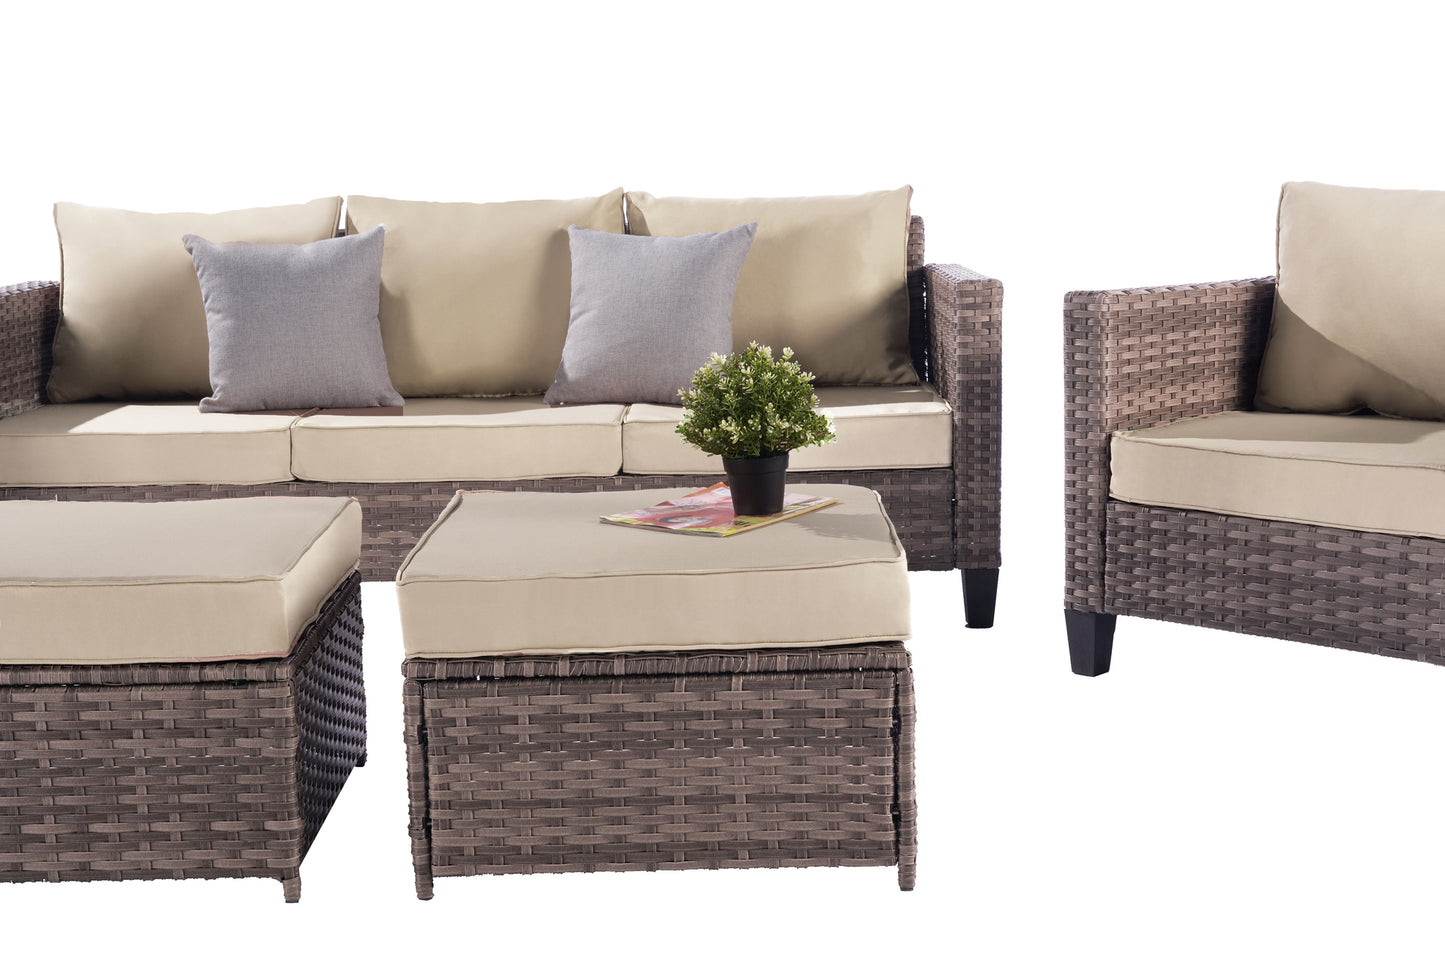 5PC Outdoor Rattan Sofa Set